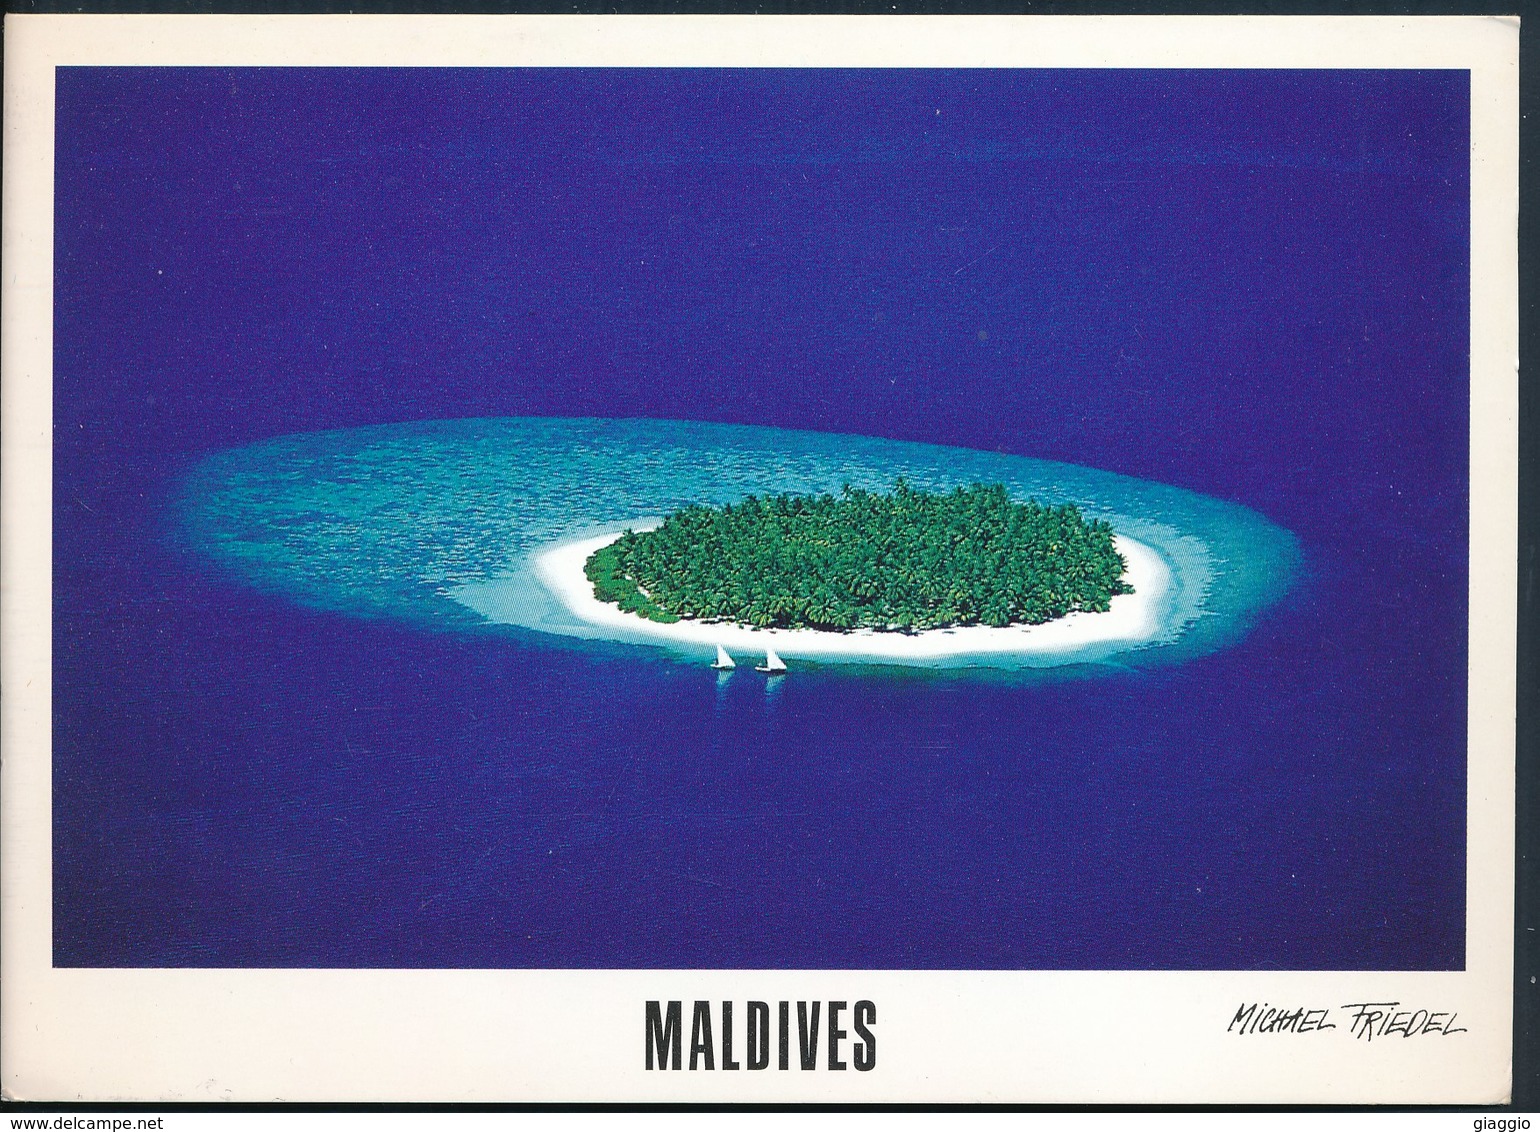 °°° 19469 - MALDIVES - ATOLL - 2002 With Stamps °°° - Maldives